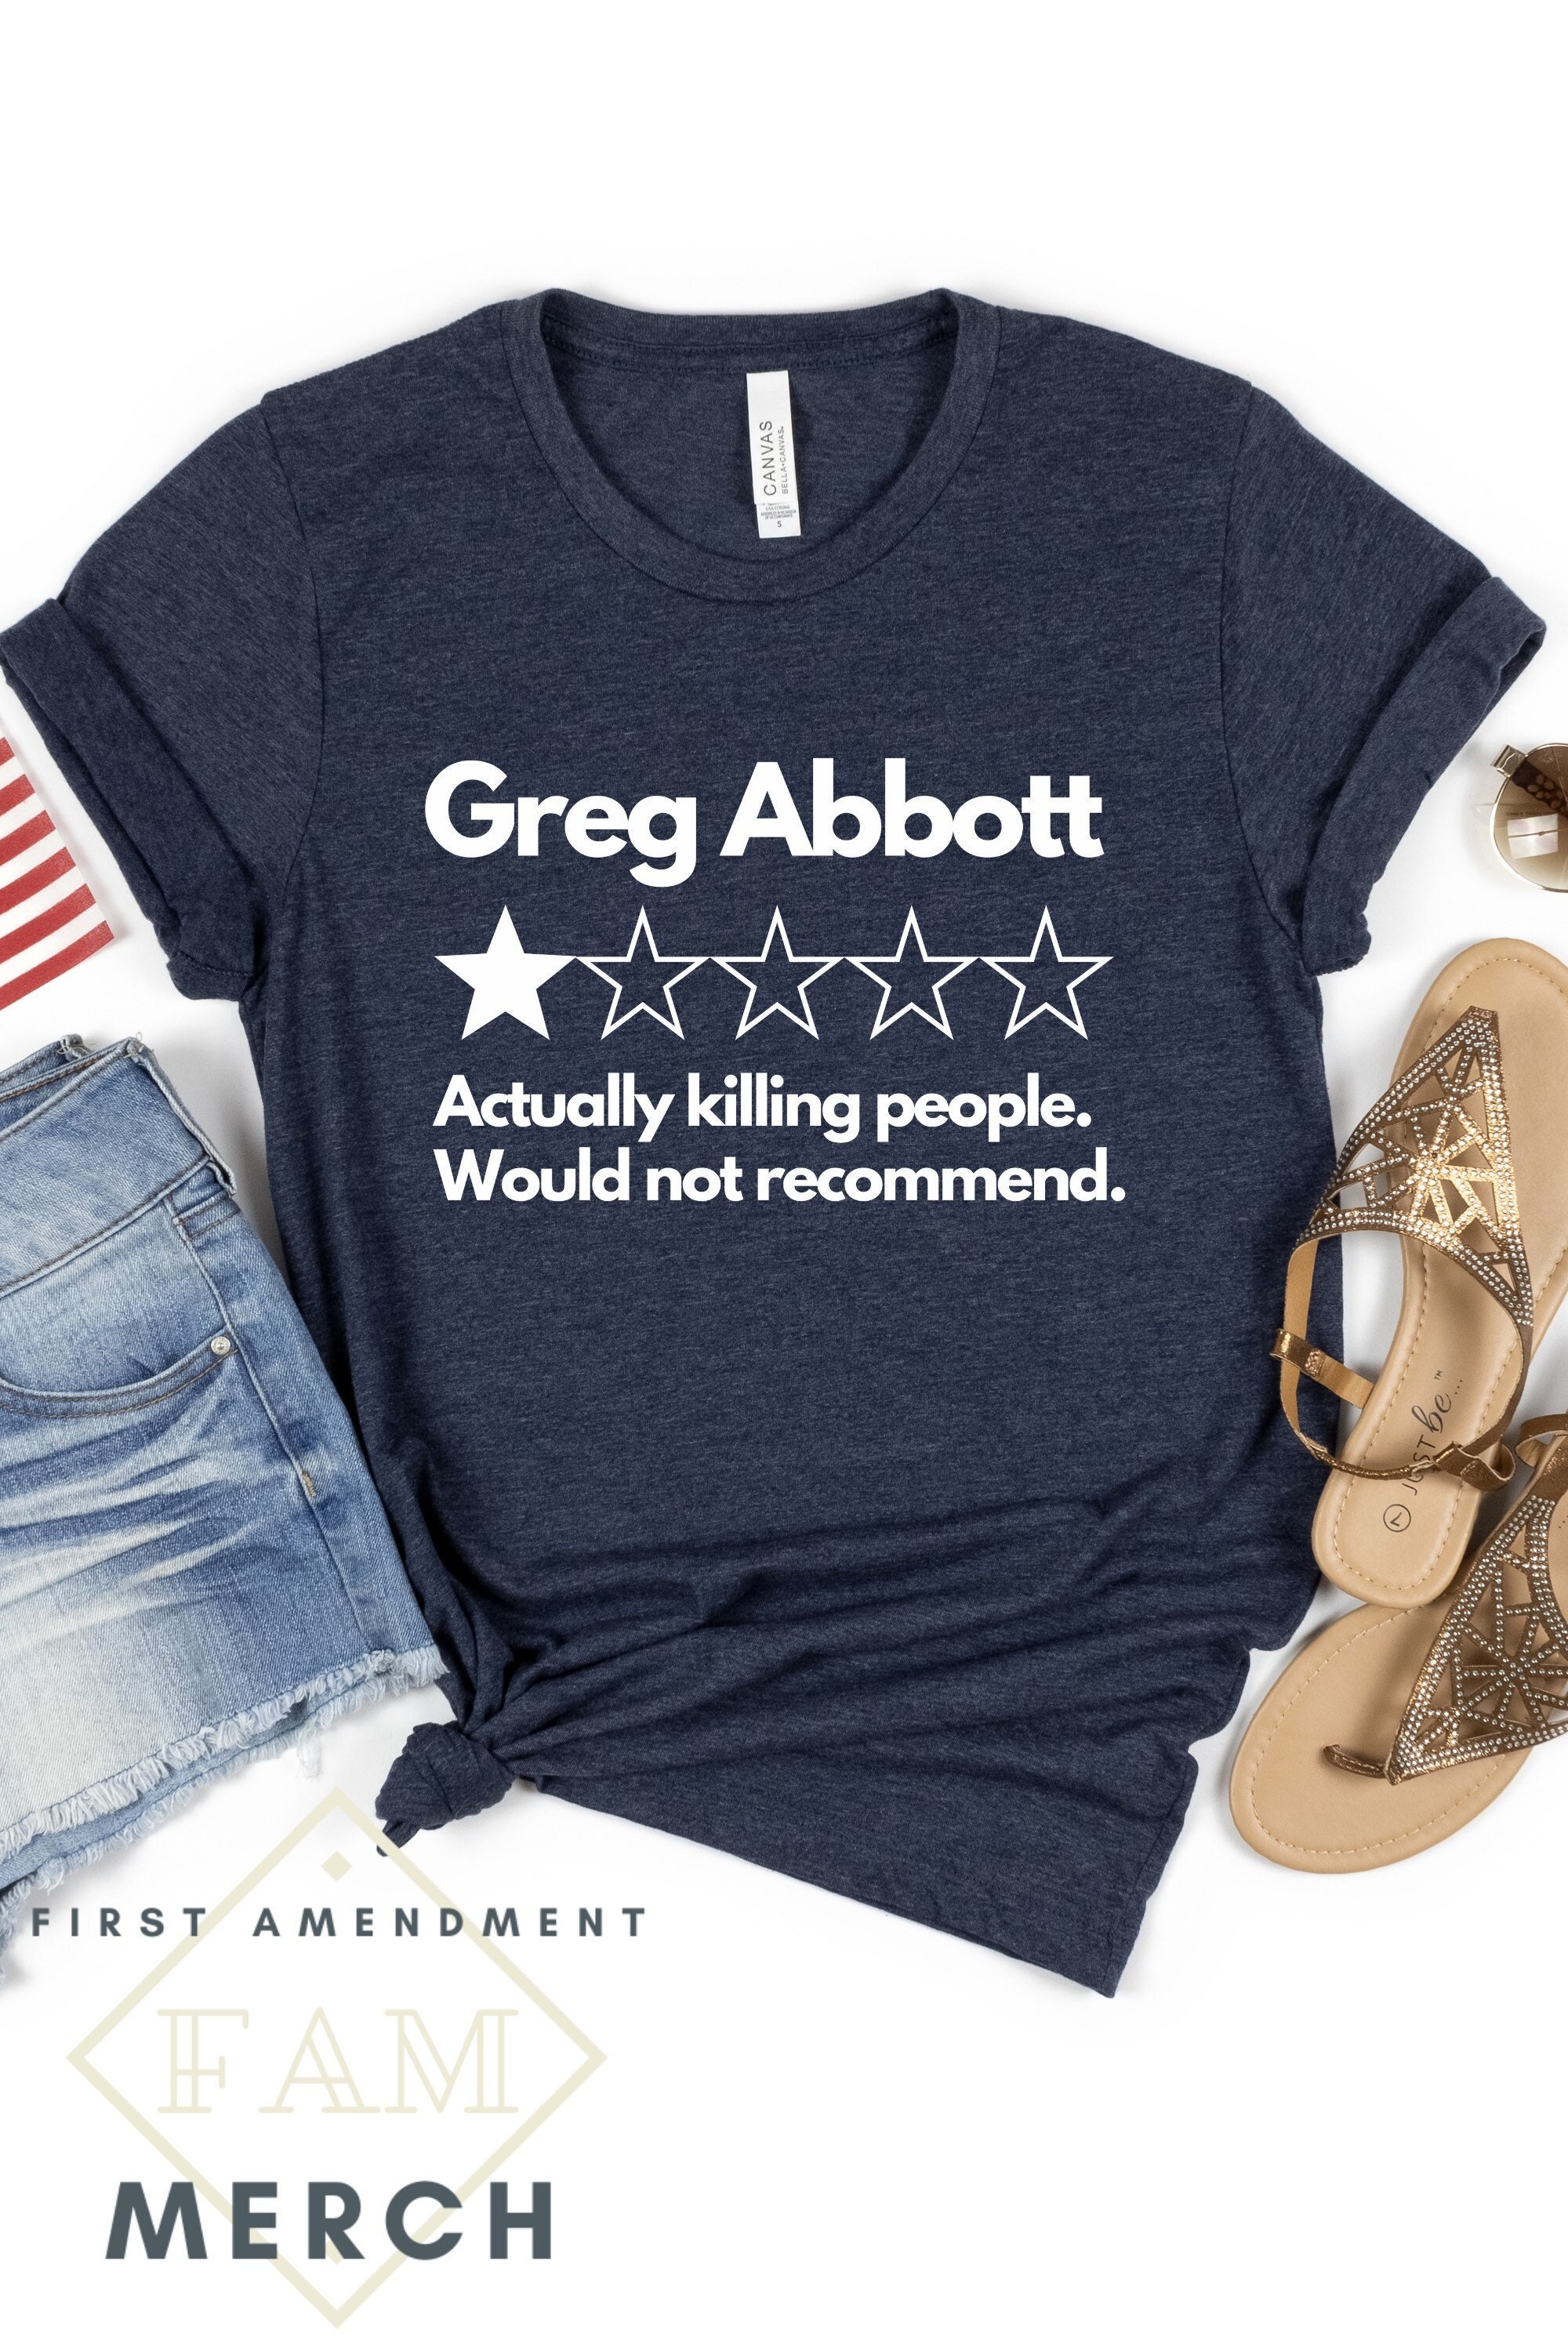 Greg Abbott Bad Review 1 Star Reviews Texas Governor Greg